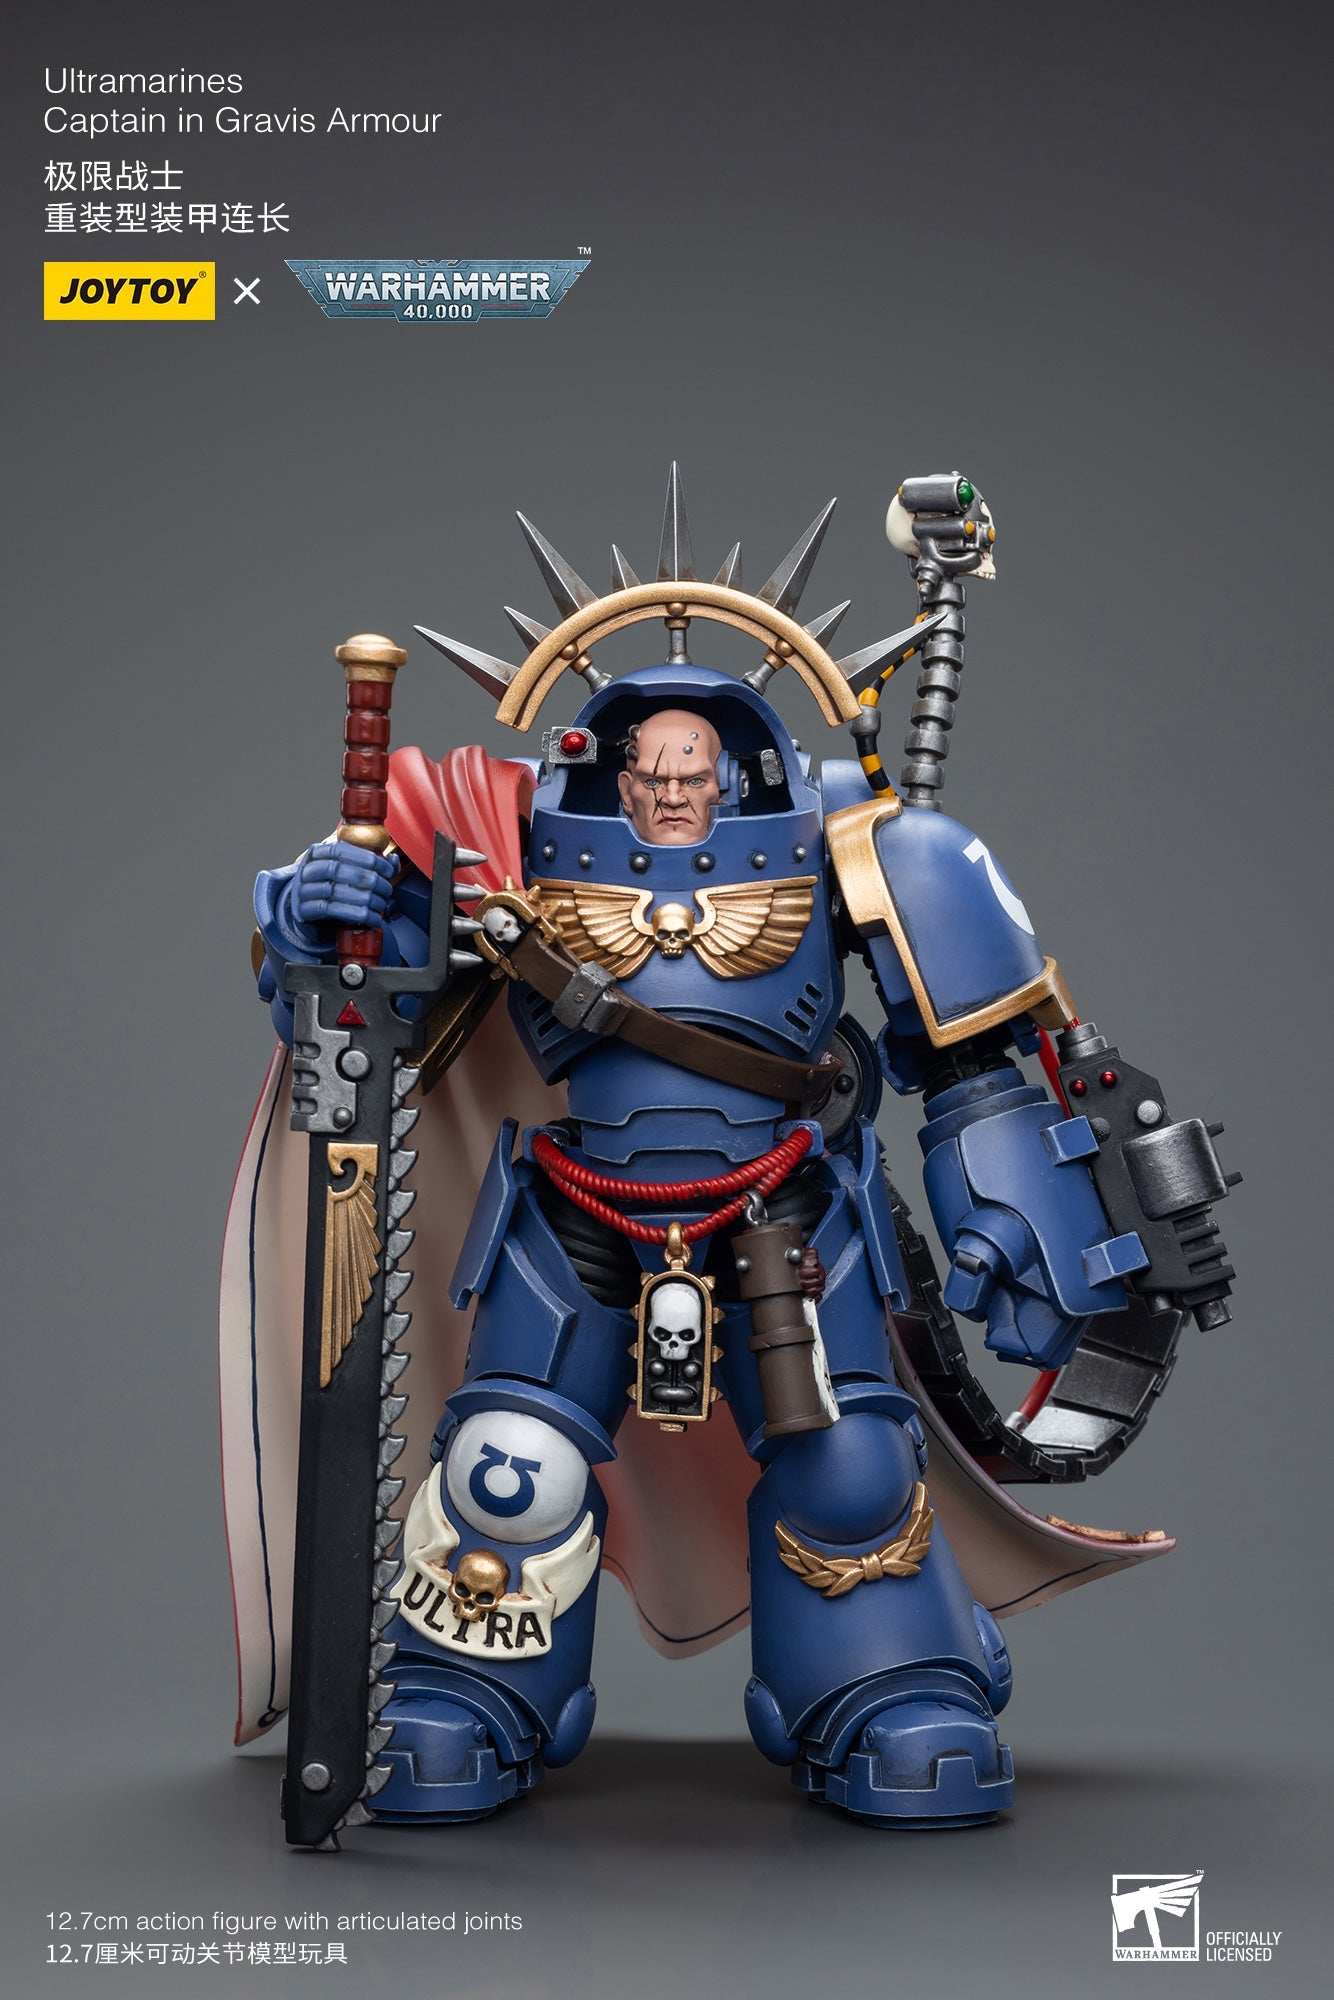 Ultramarines Captain in Gravis Armour - Warhammer 40K Action Figure By JOYTOY